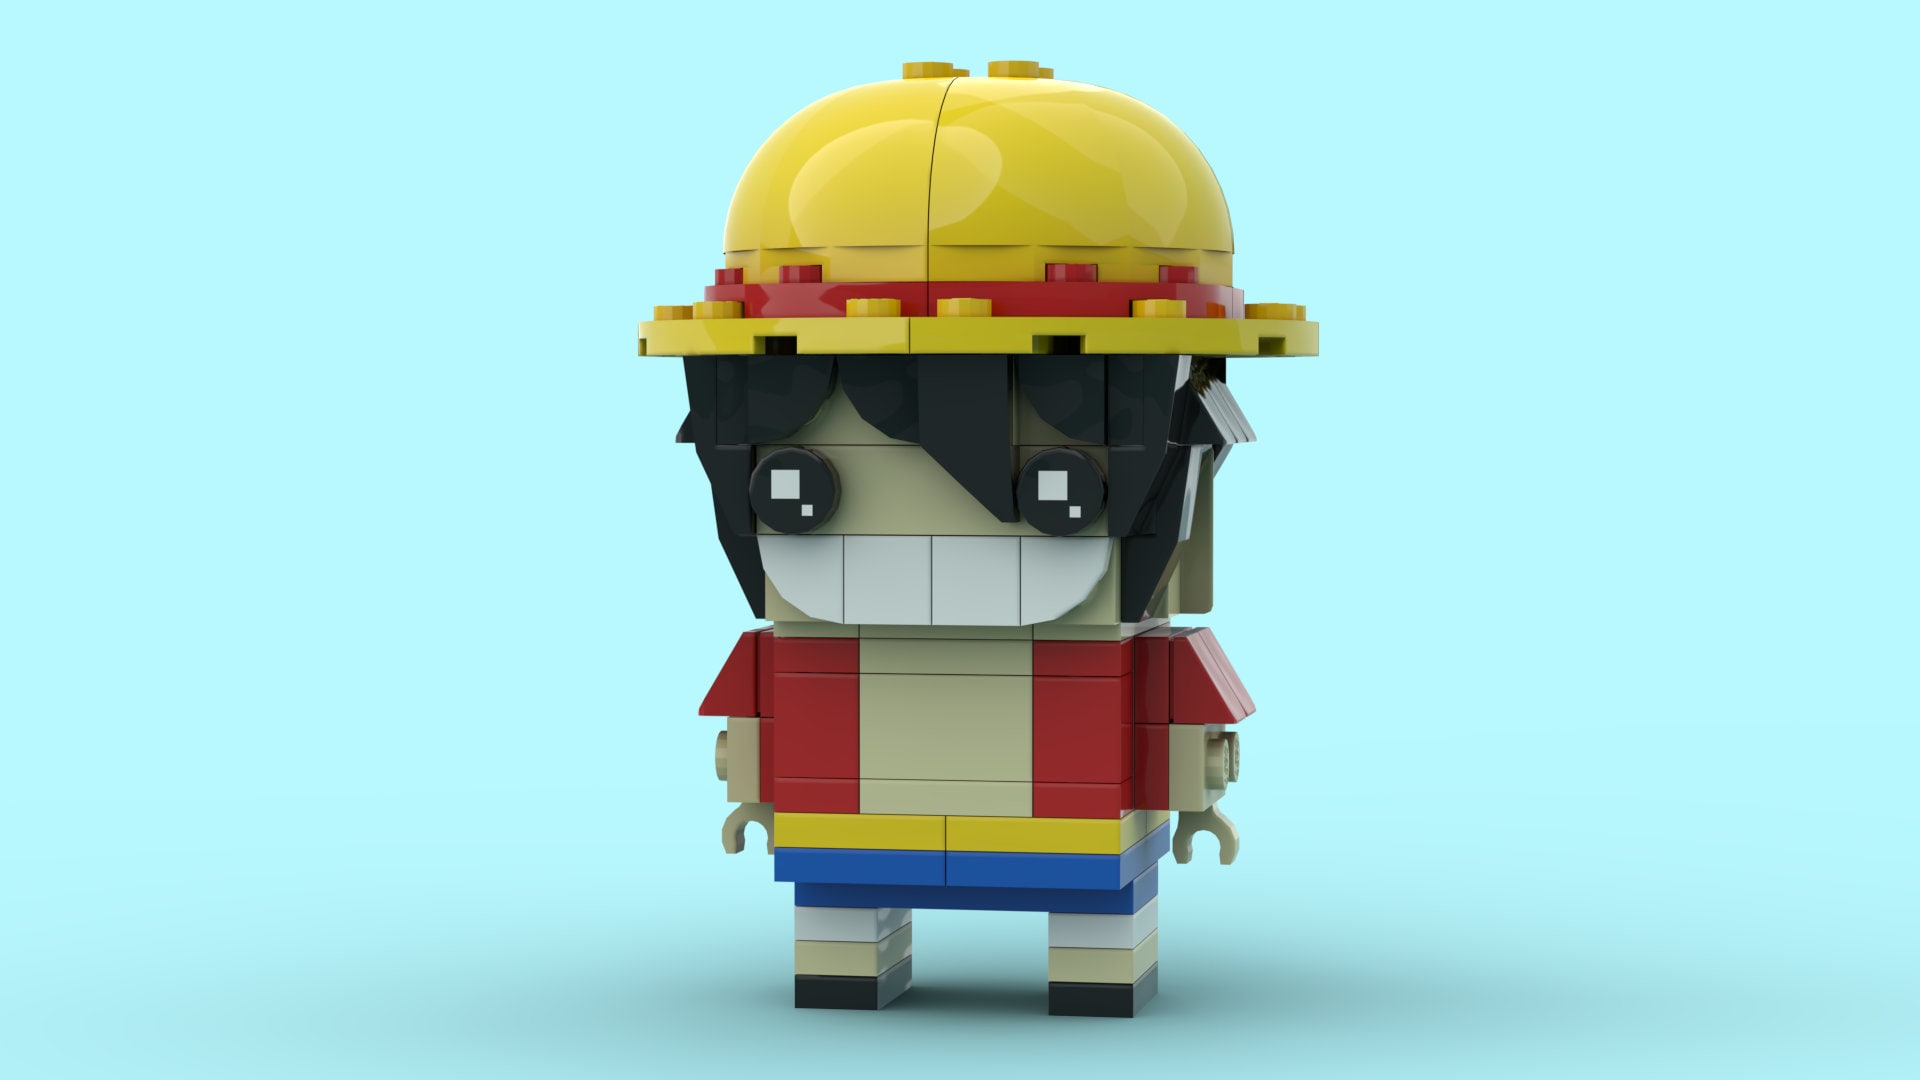 LEGO One Piece Monkey D. Luffy Custom Minifigure by HOBBYB…